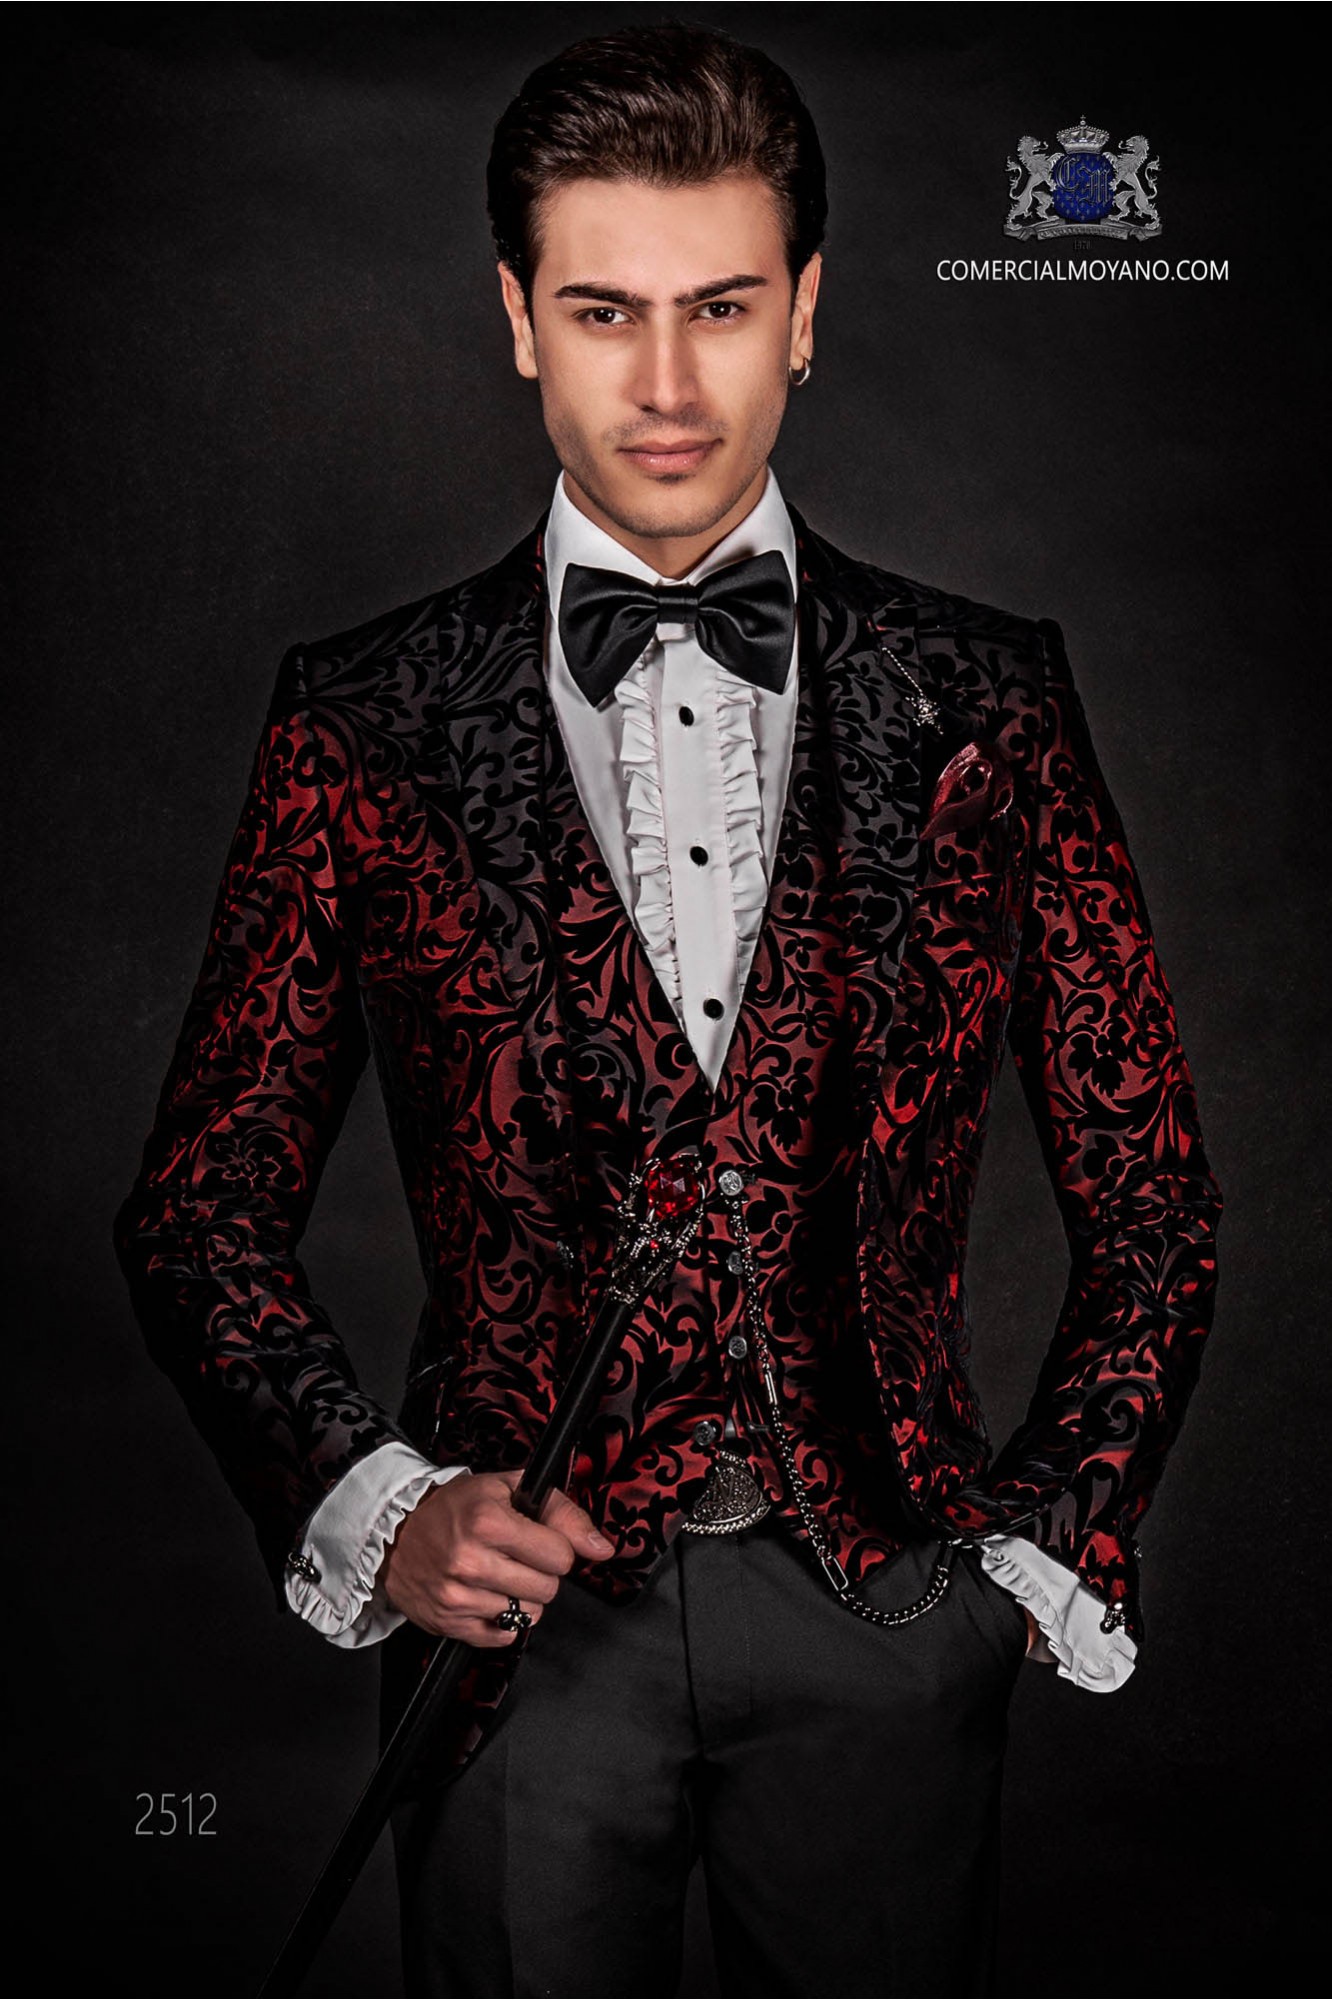 Italian velvet red tuxedo with a special design model 2512 Mario Moyano